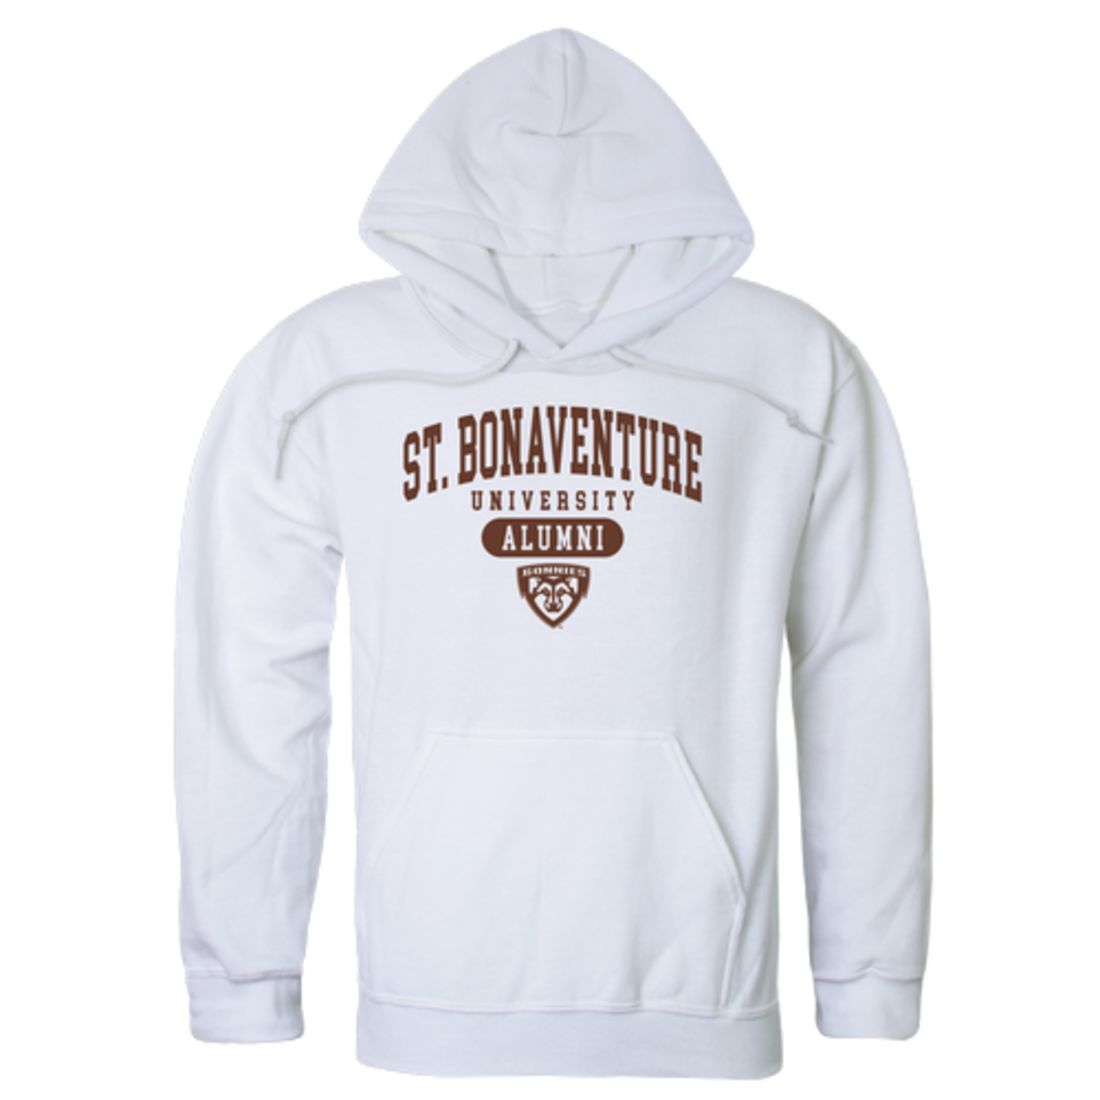 SBU St. Bonaventure University Bonnies Alumni Fleece Hoodie Sweatshirts Heather Charcoal-Campus-Wardrobe